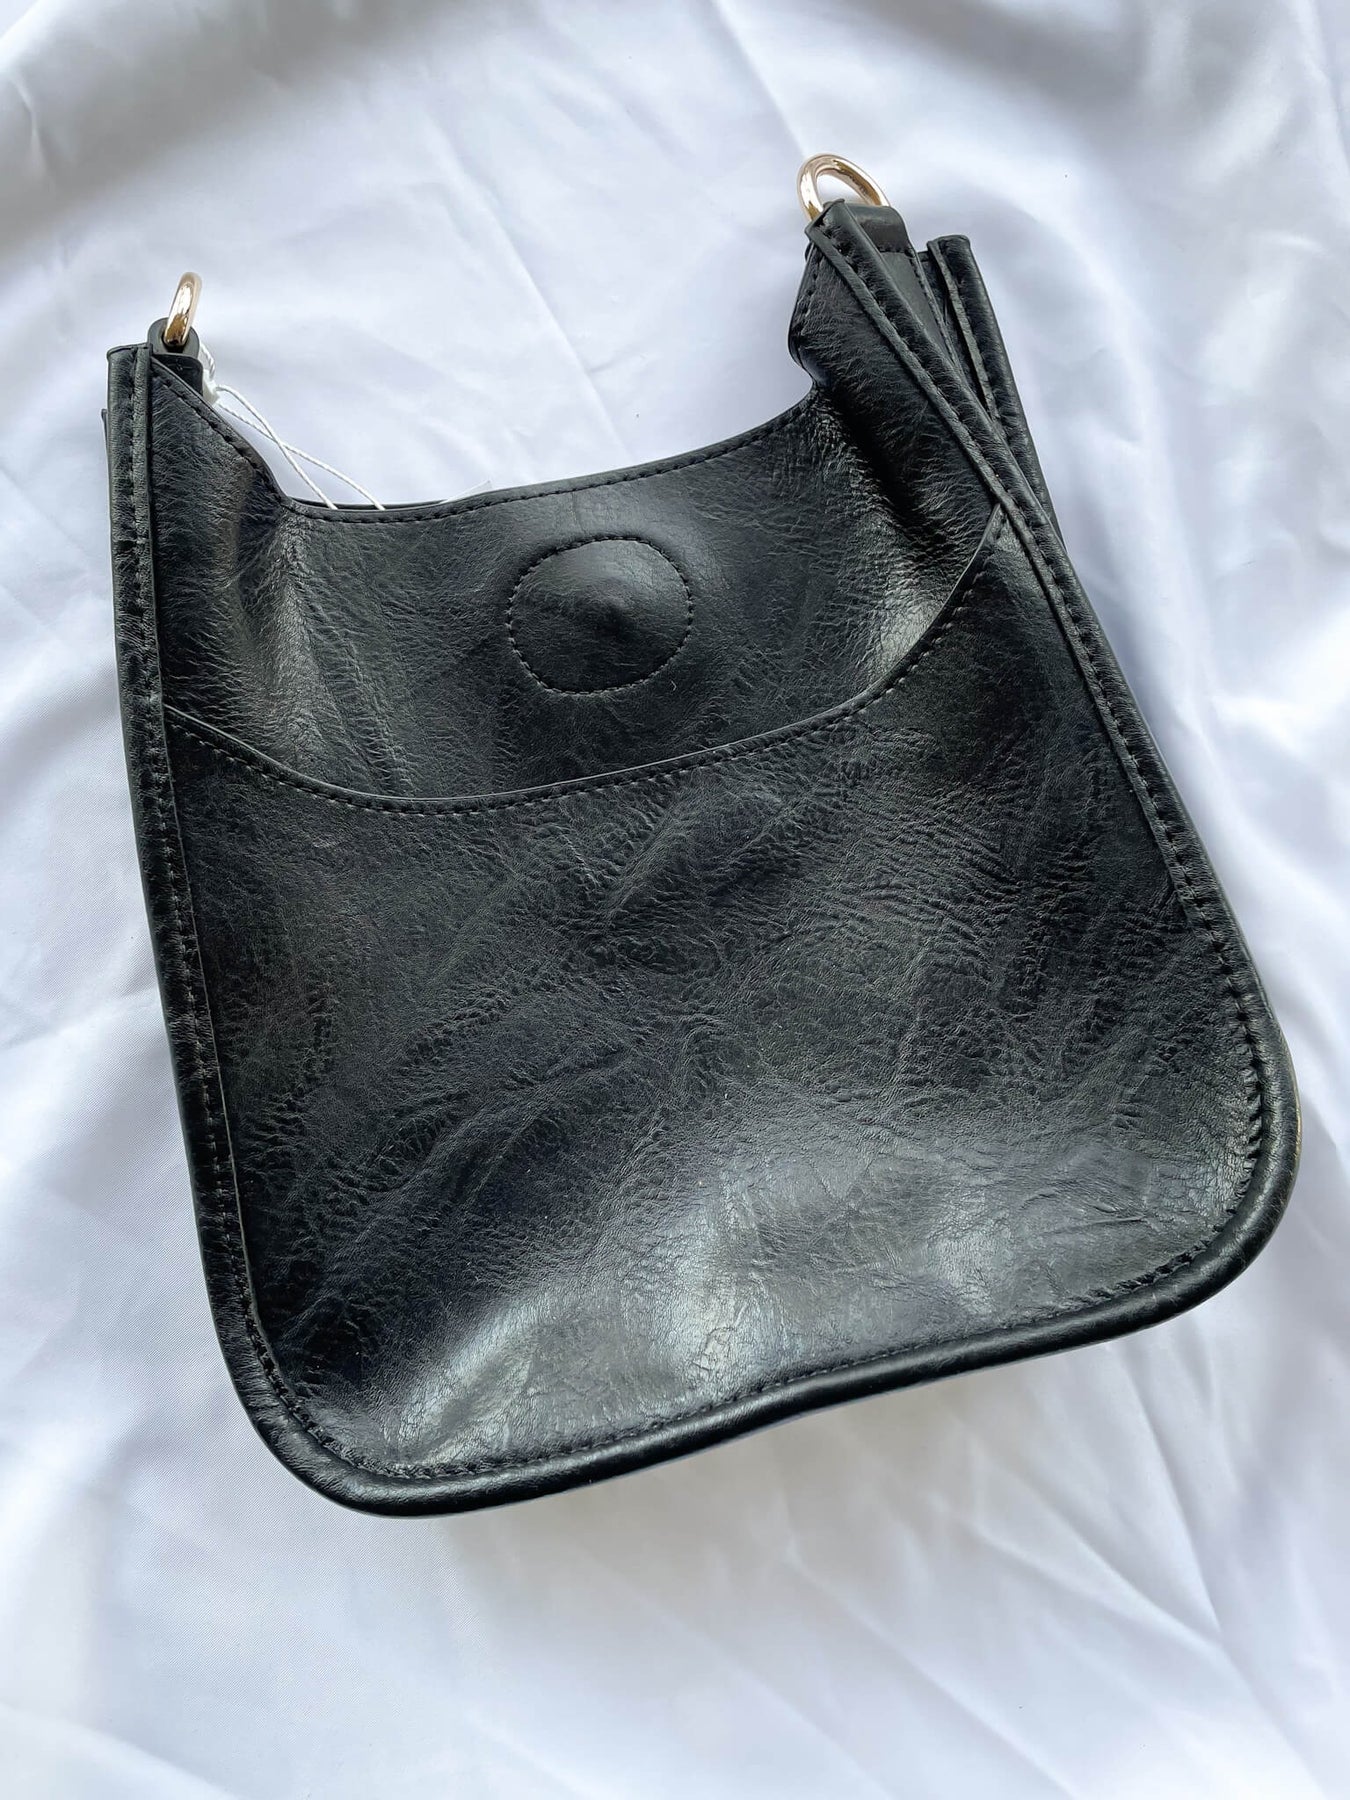 Ahdorned Petal Embroidered Bag Strap - Silver (Silver Hardware)